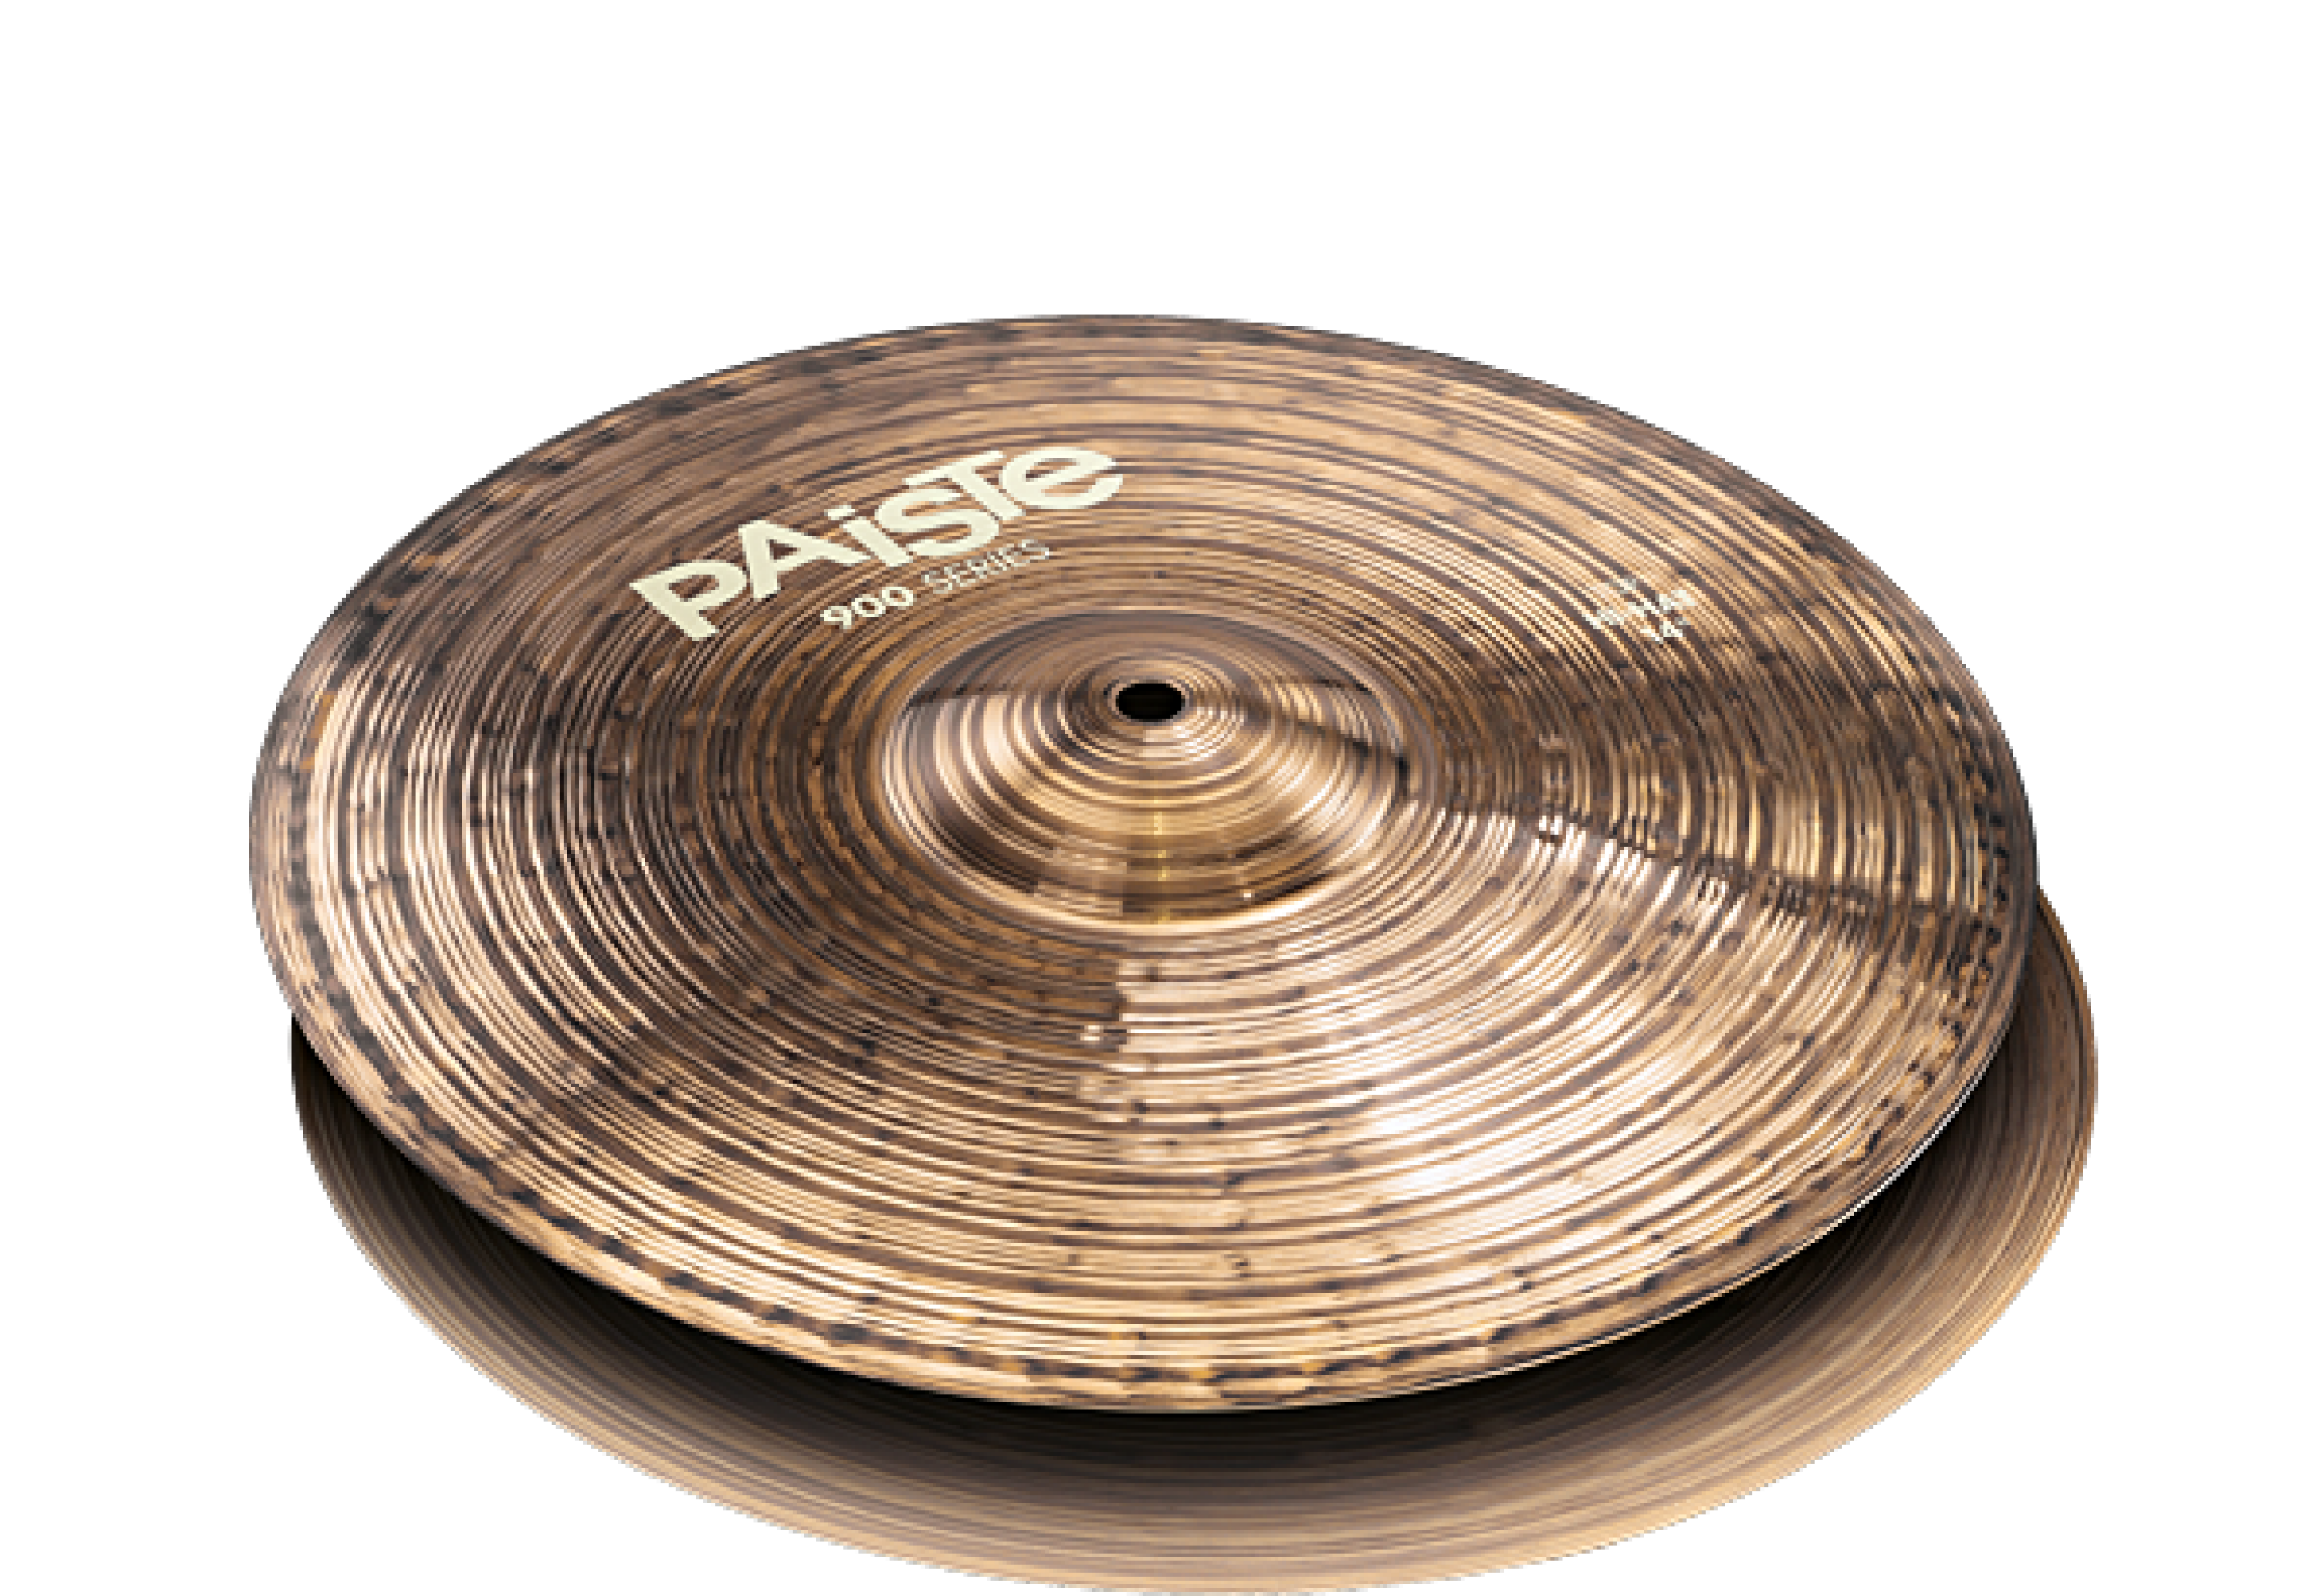 Paiste 14 inch 900 Series Hi-hat Cymbals